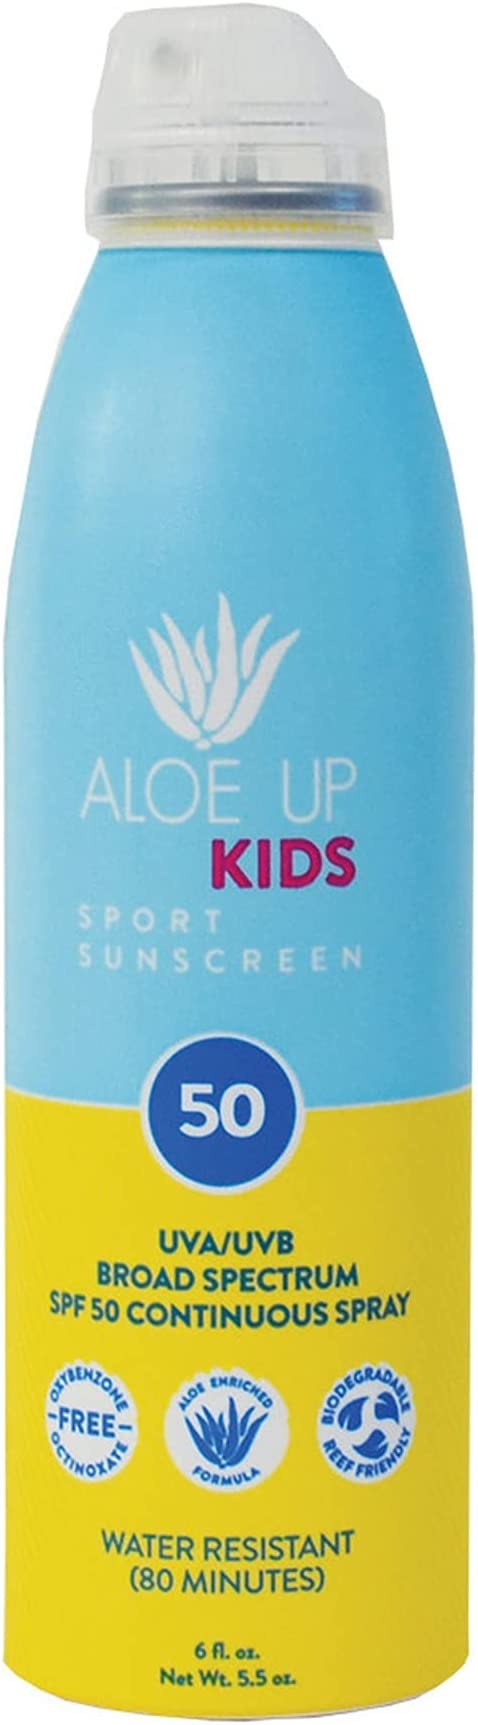 Kids Sport Spray Sunscreen - SPF 50